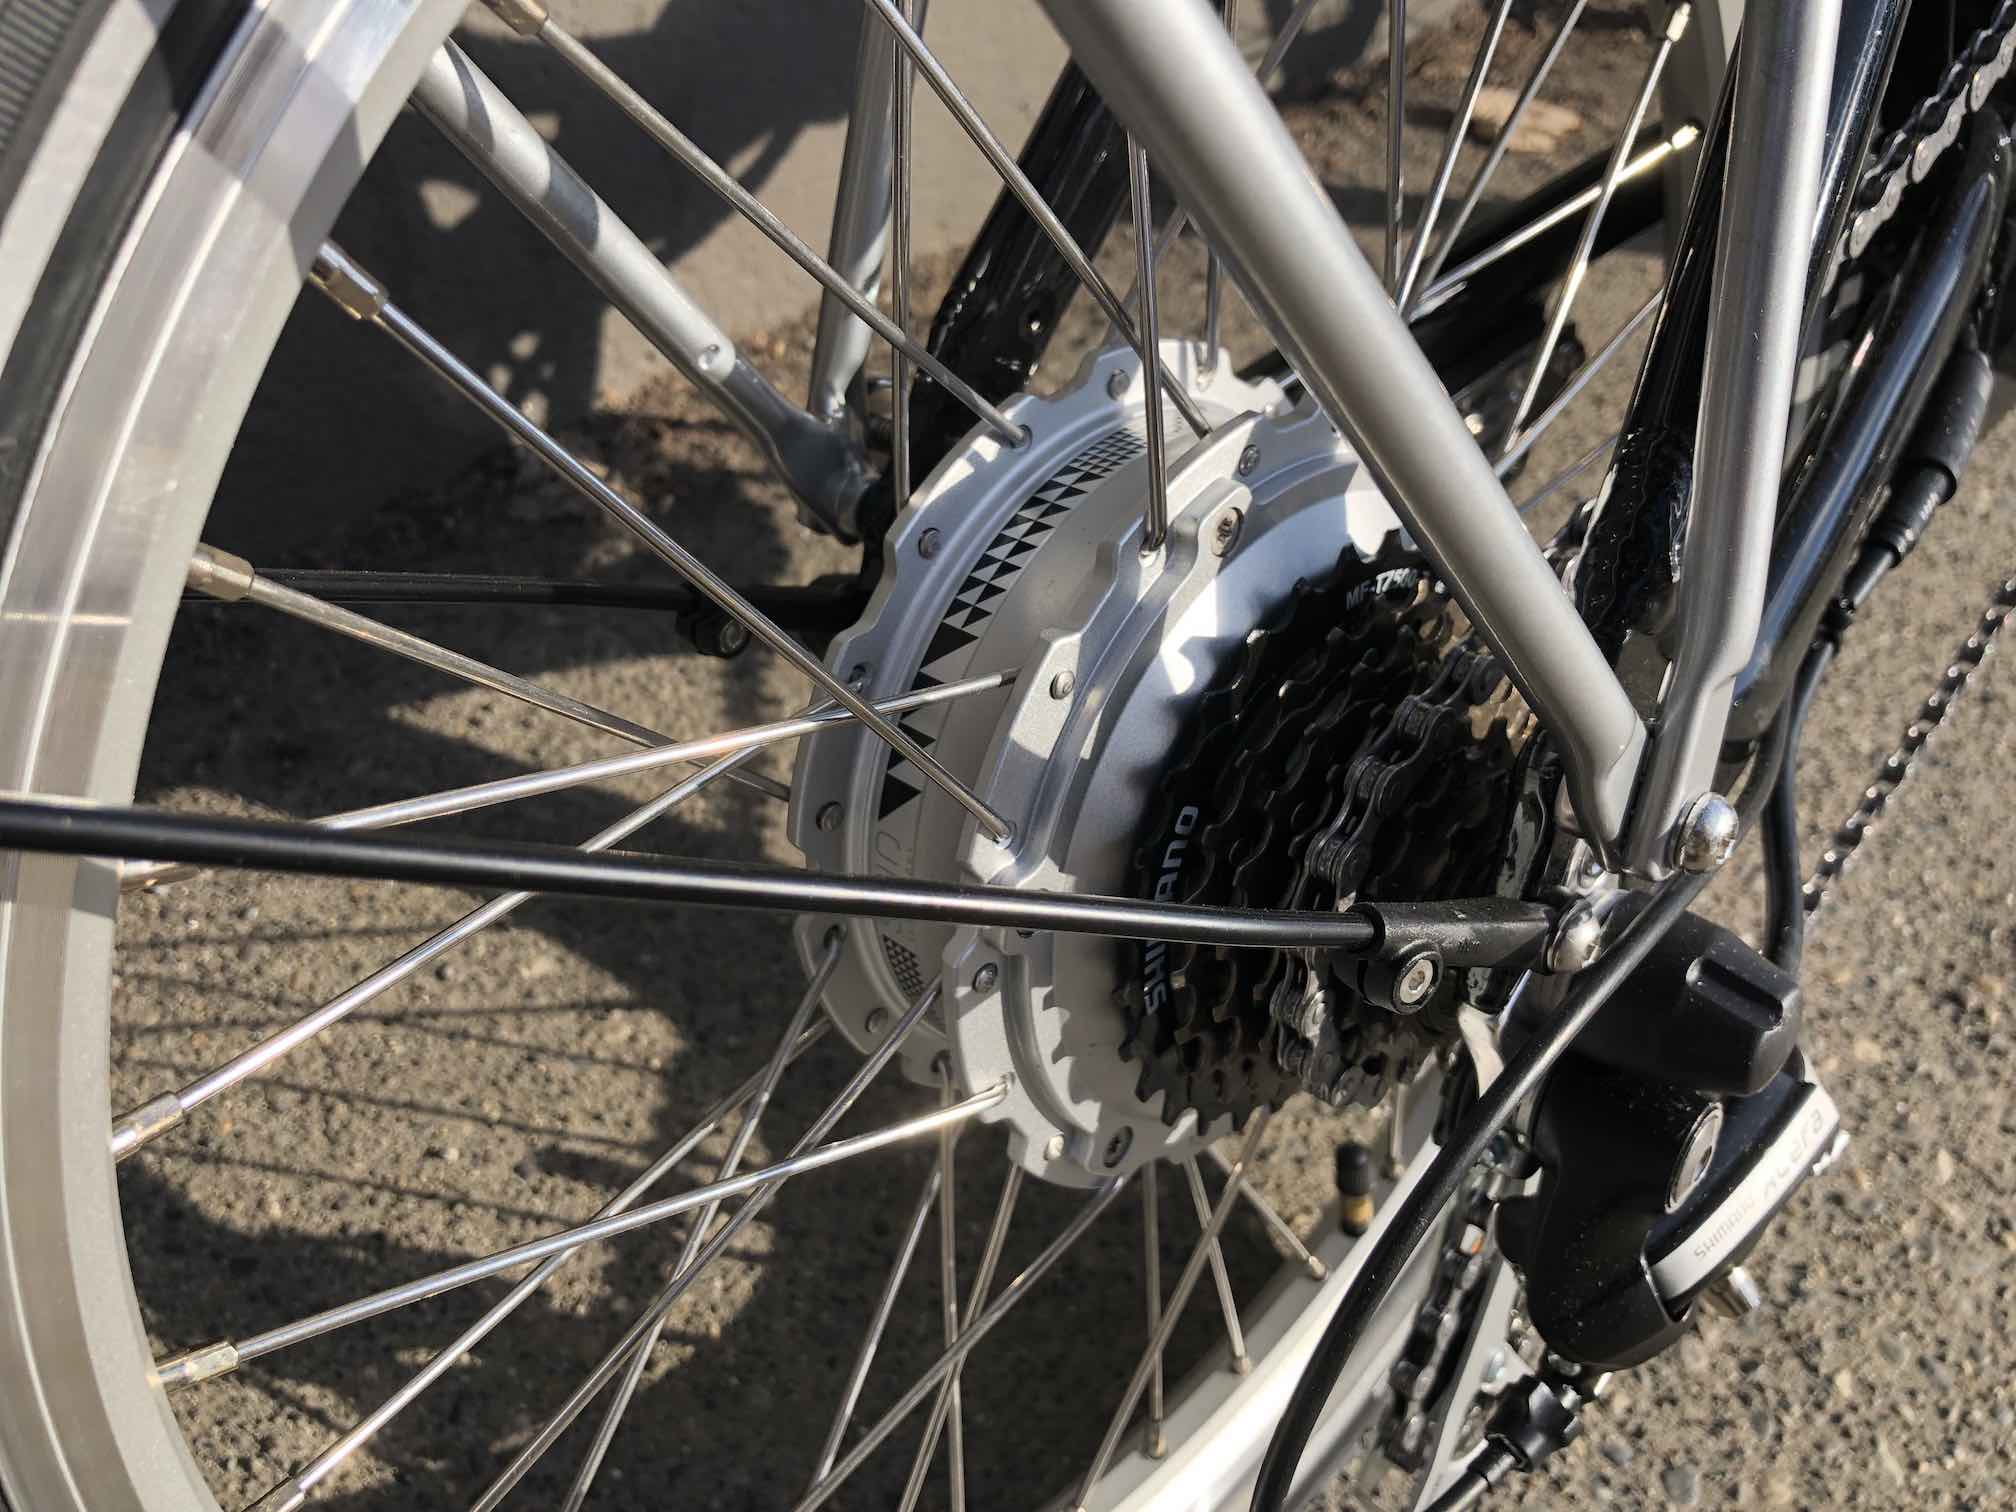 hub motor for bicycle